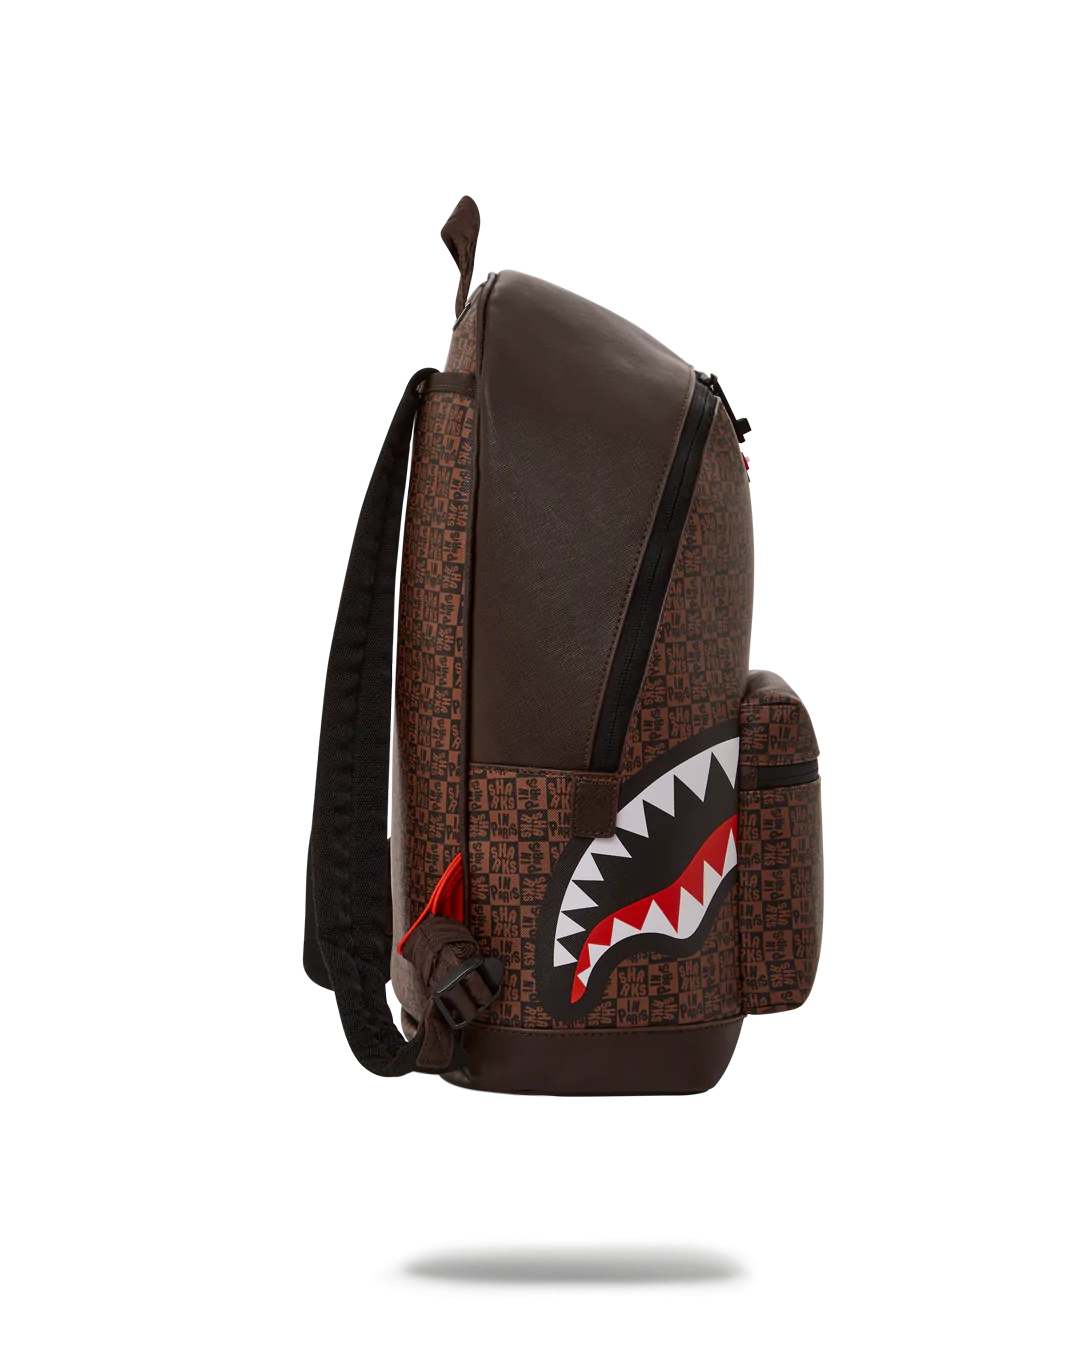 price supreme shark backpack